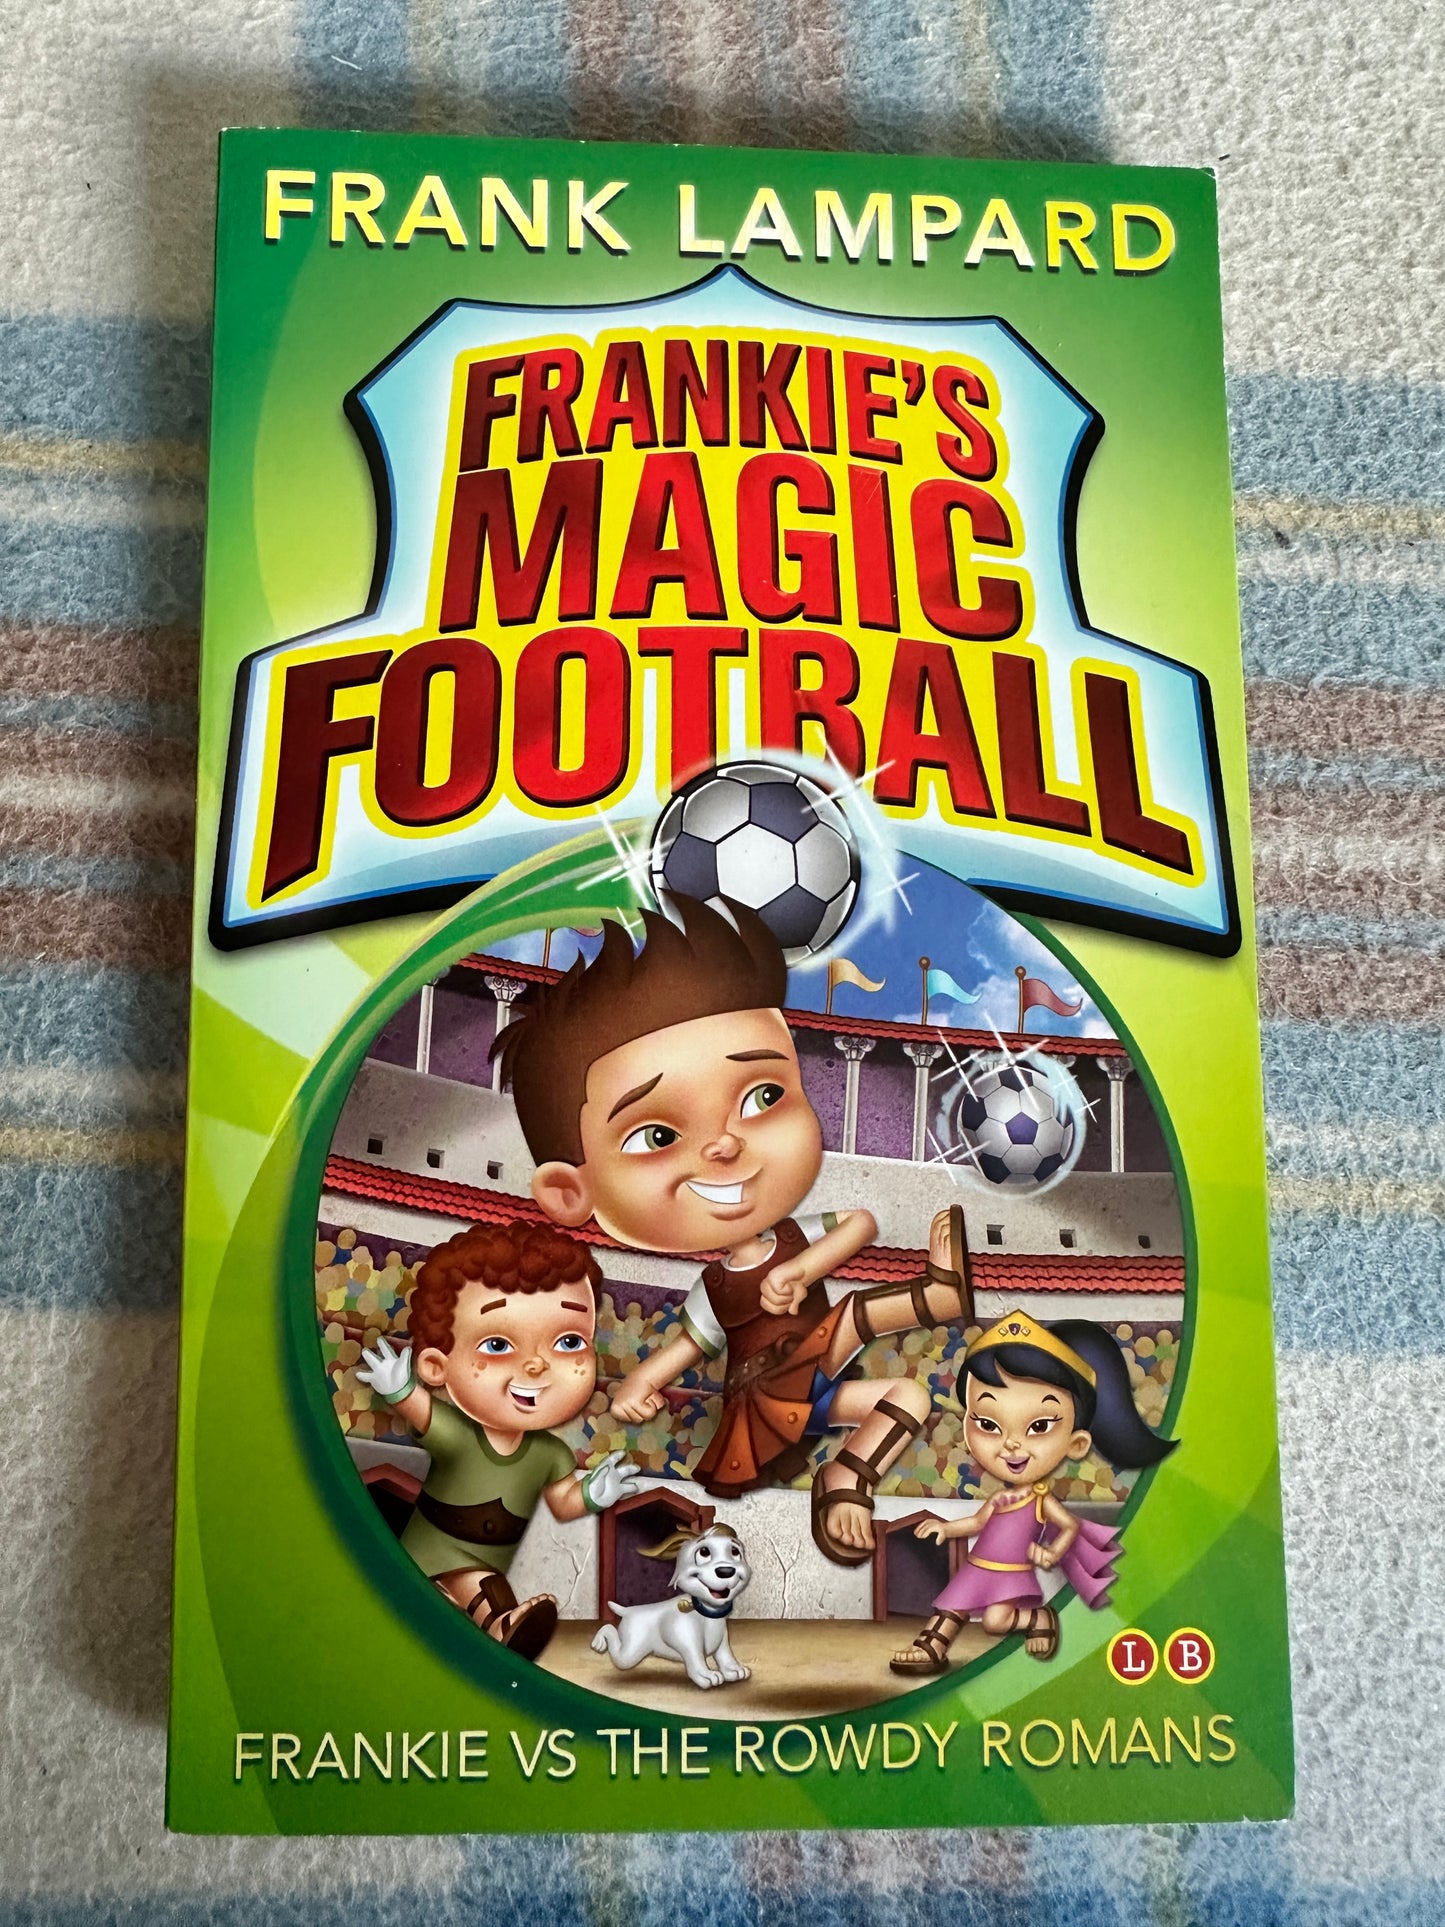 2013*1st* Frankie’s Magic Football - Frank Lampard(Little Brown Publishers)